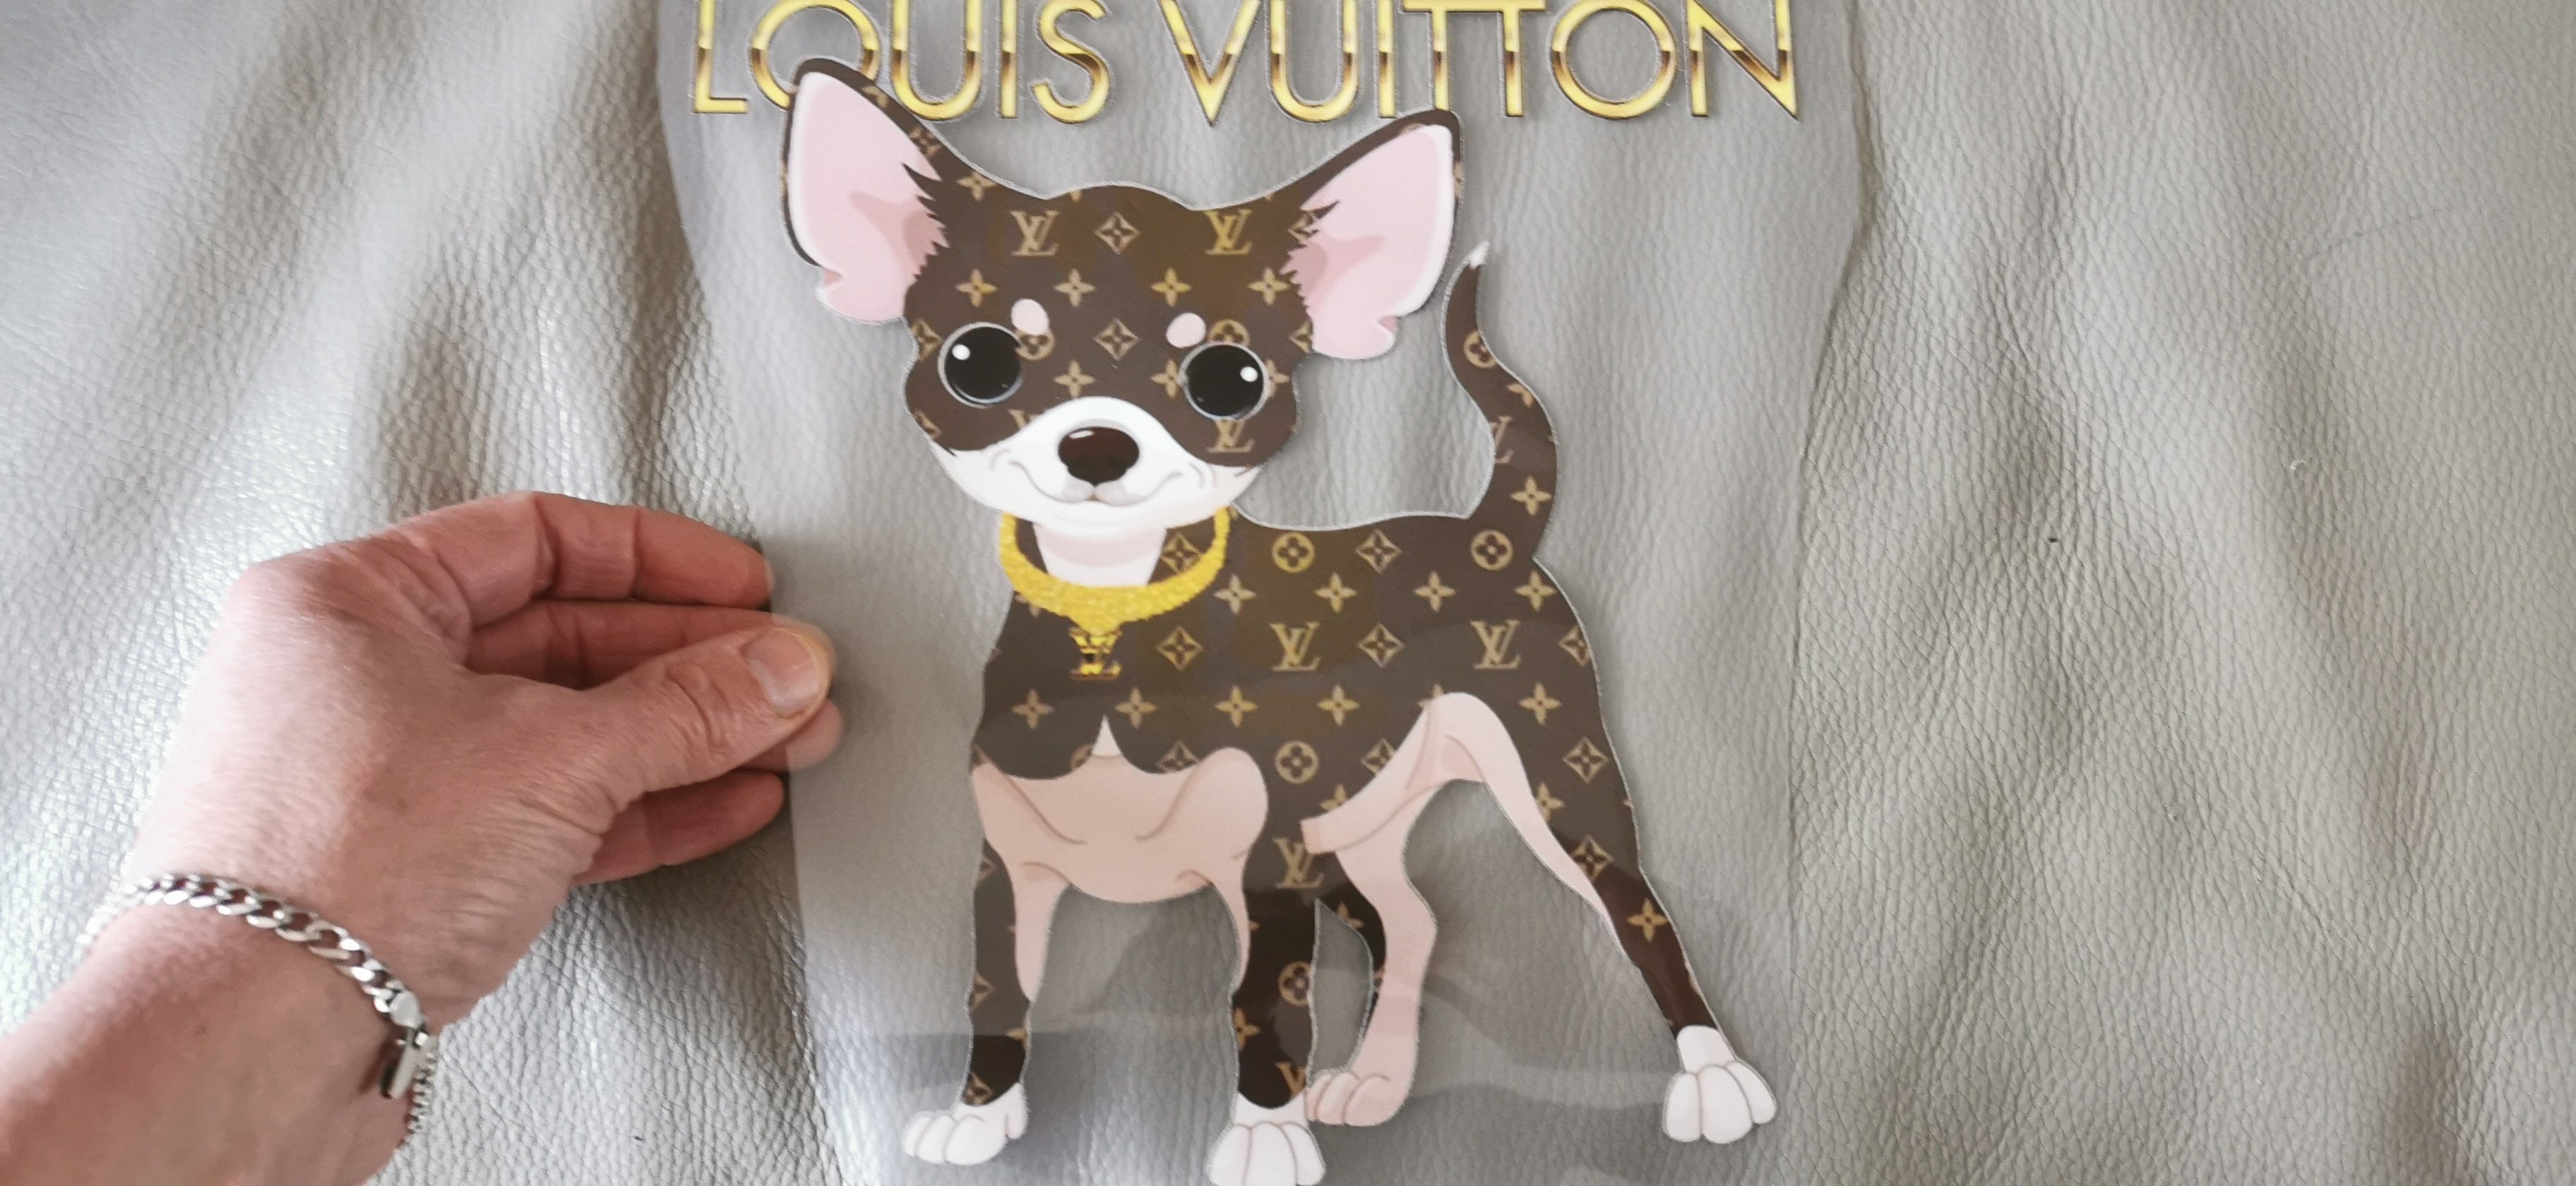 The Louis Vuitton Dog - TGIF 🎉🎉🎉🎉🤩🤗🤪🥳 #thelouisvuittondog  #biggiebearbulldog • • • • • #frenchiesofinstagram #frenchbulldog  #frenchbulldogli